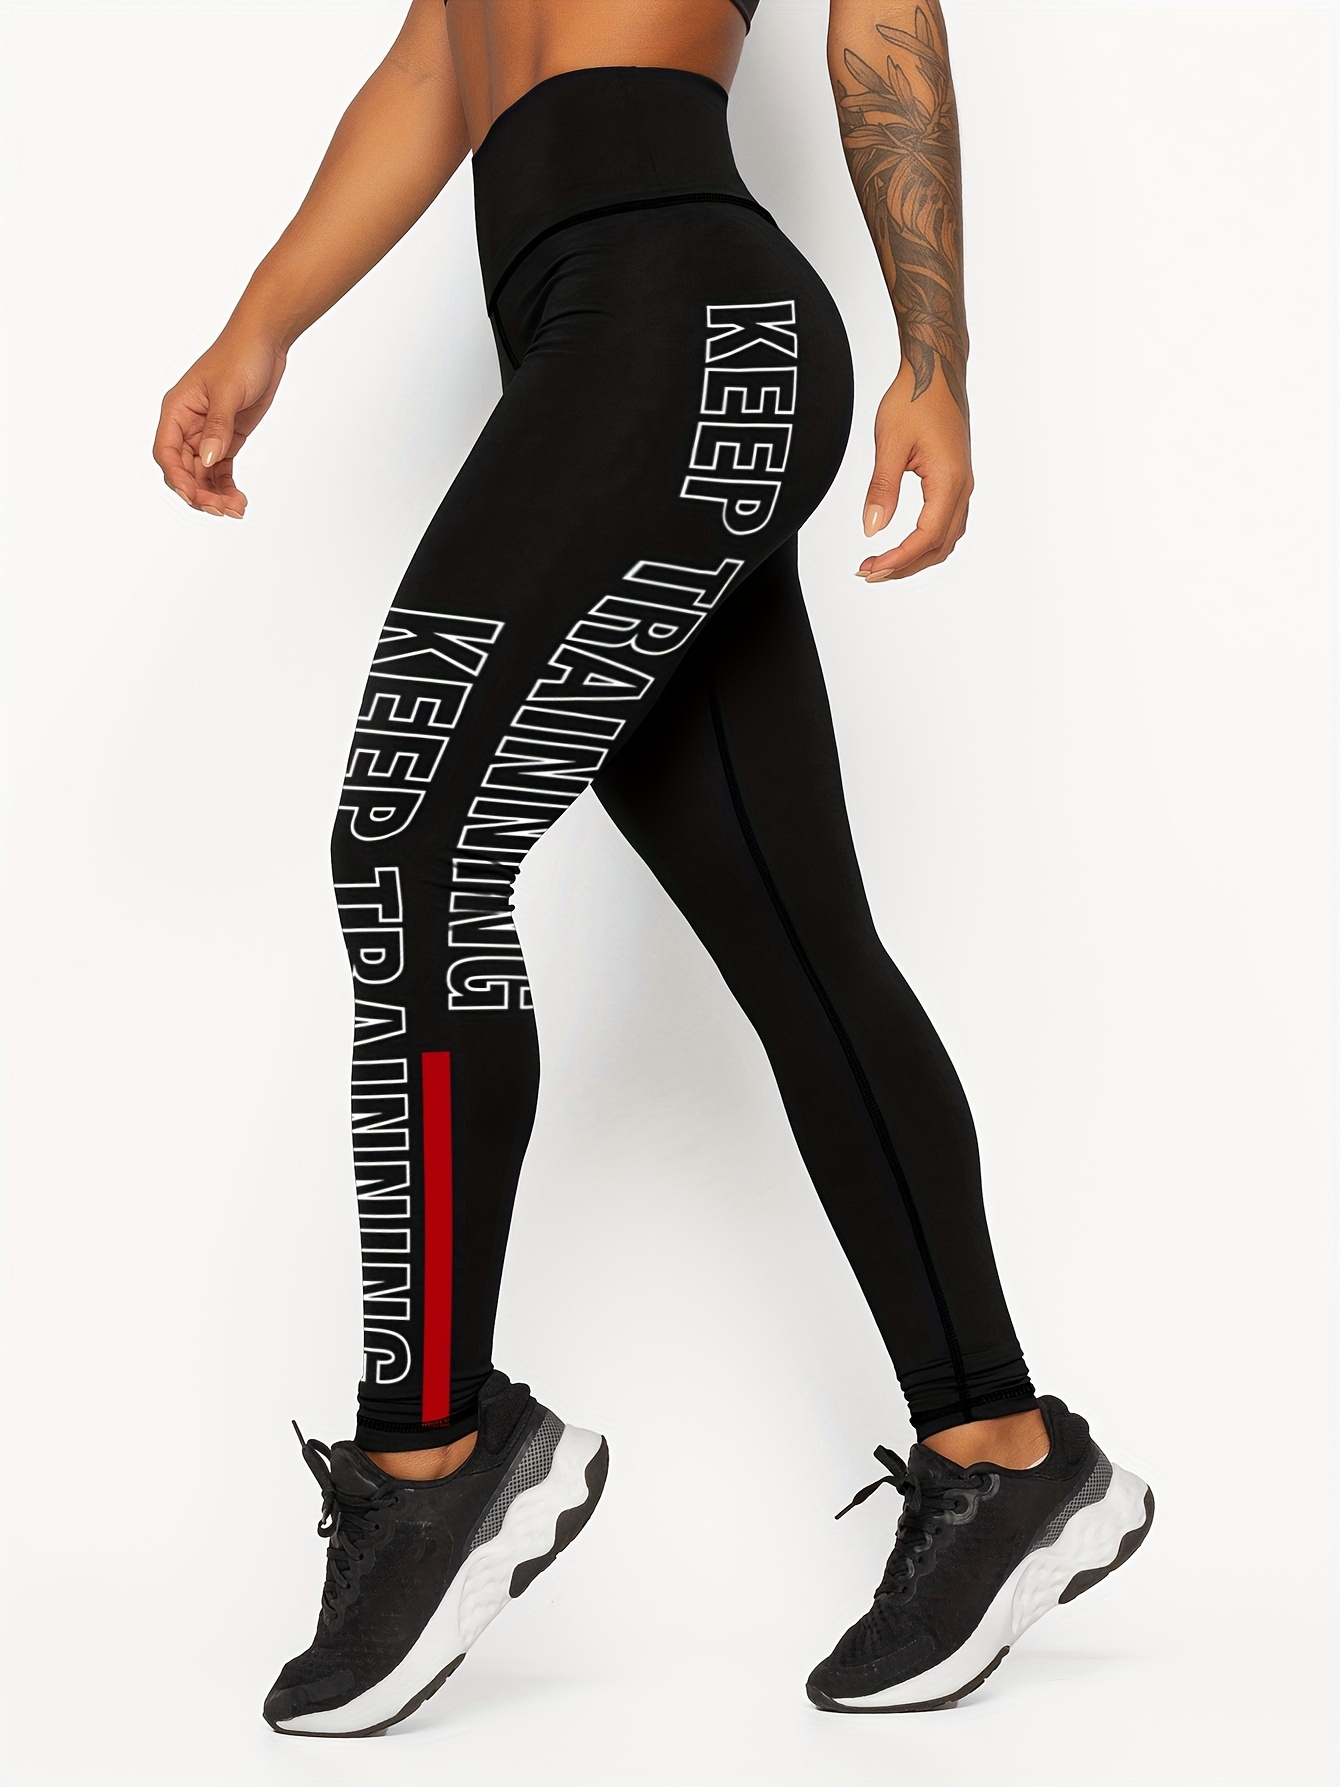 Calvin Klein Stretch Athletic Leggings for Women